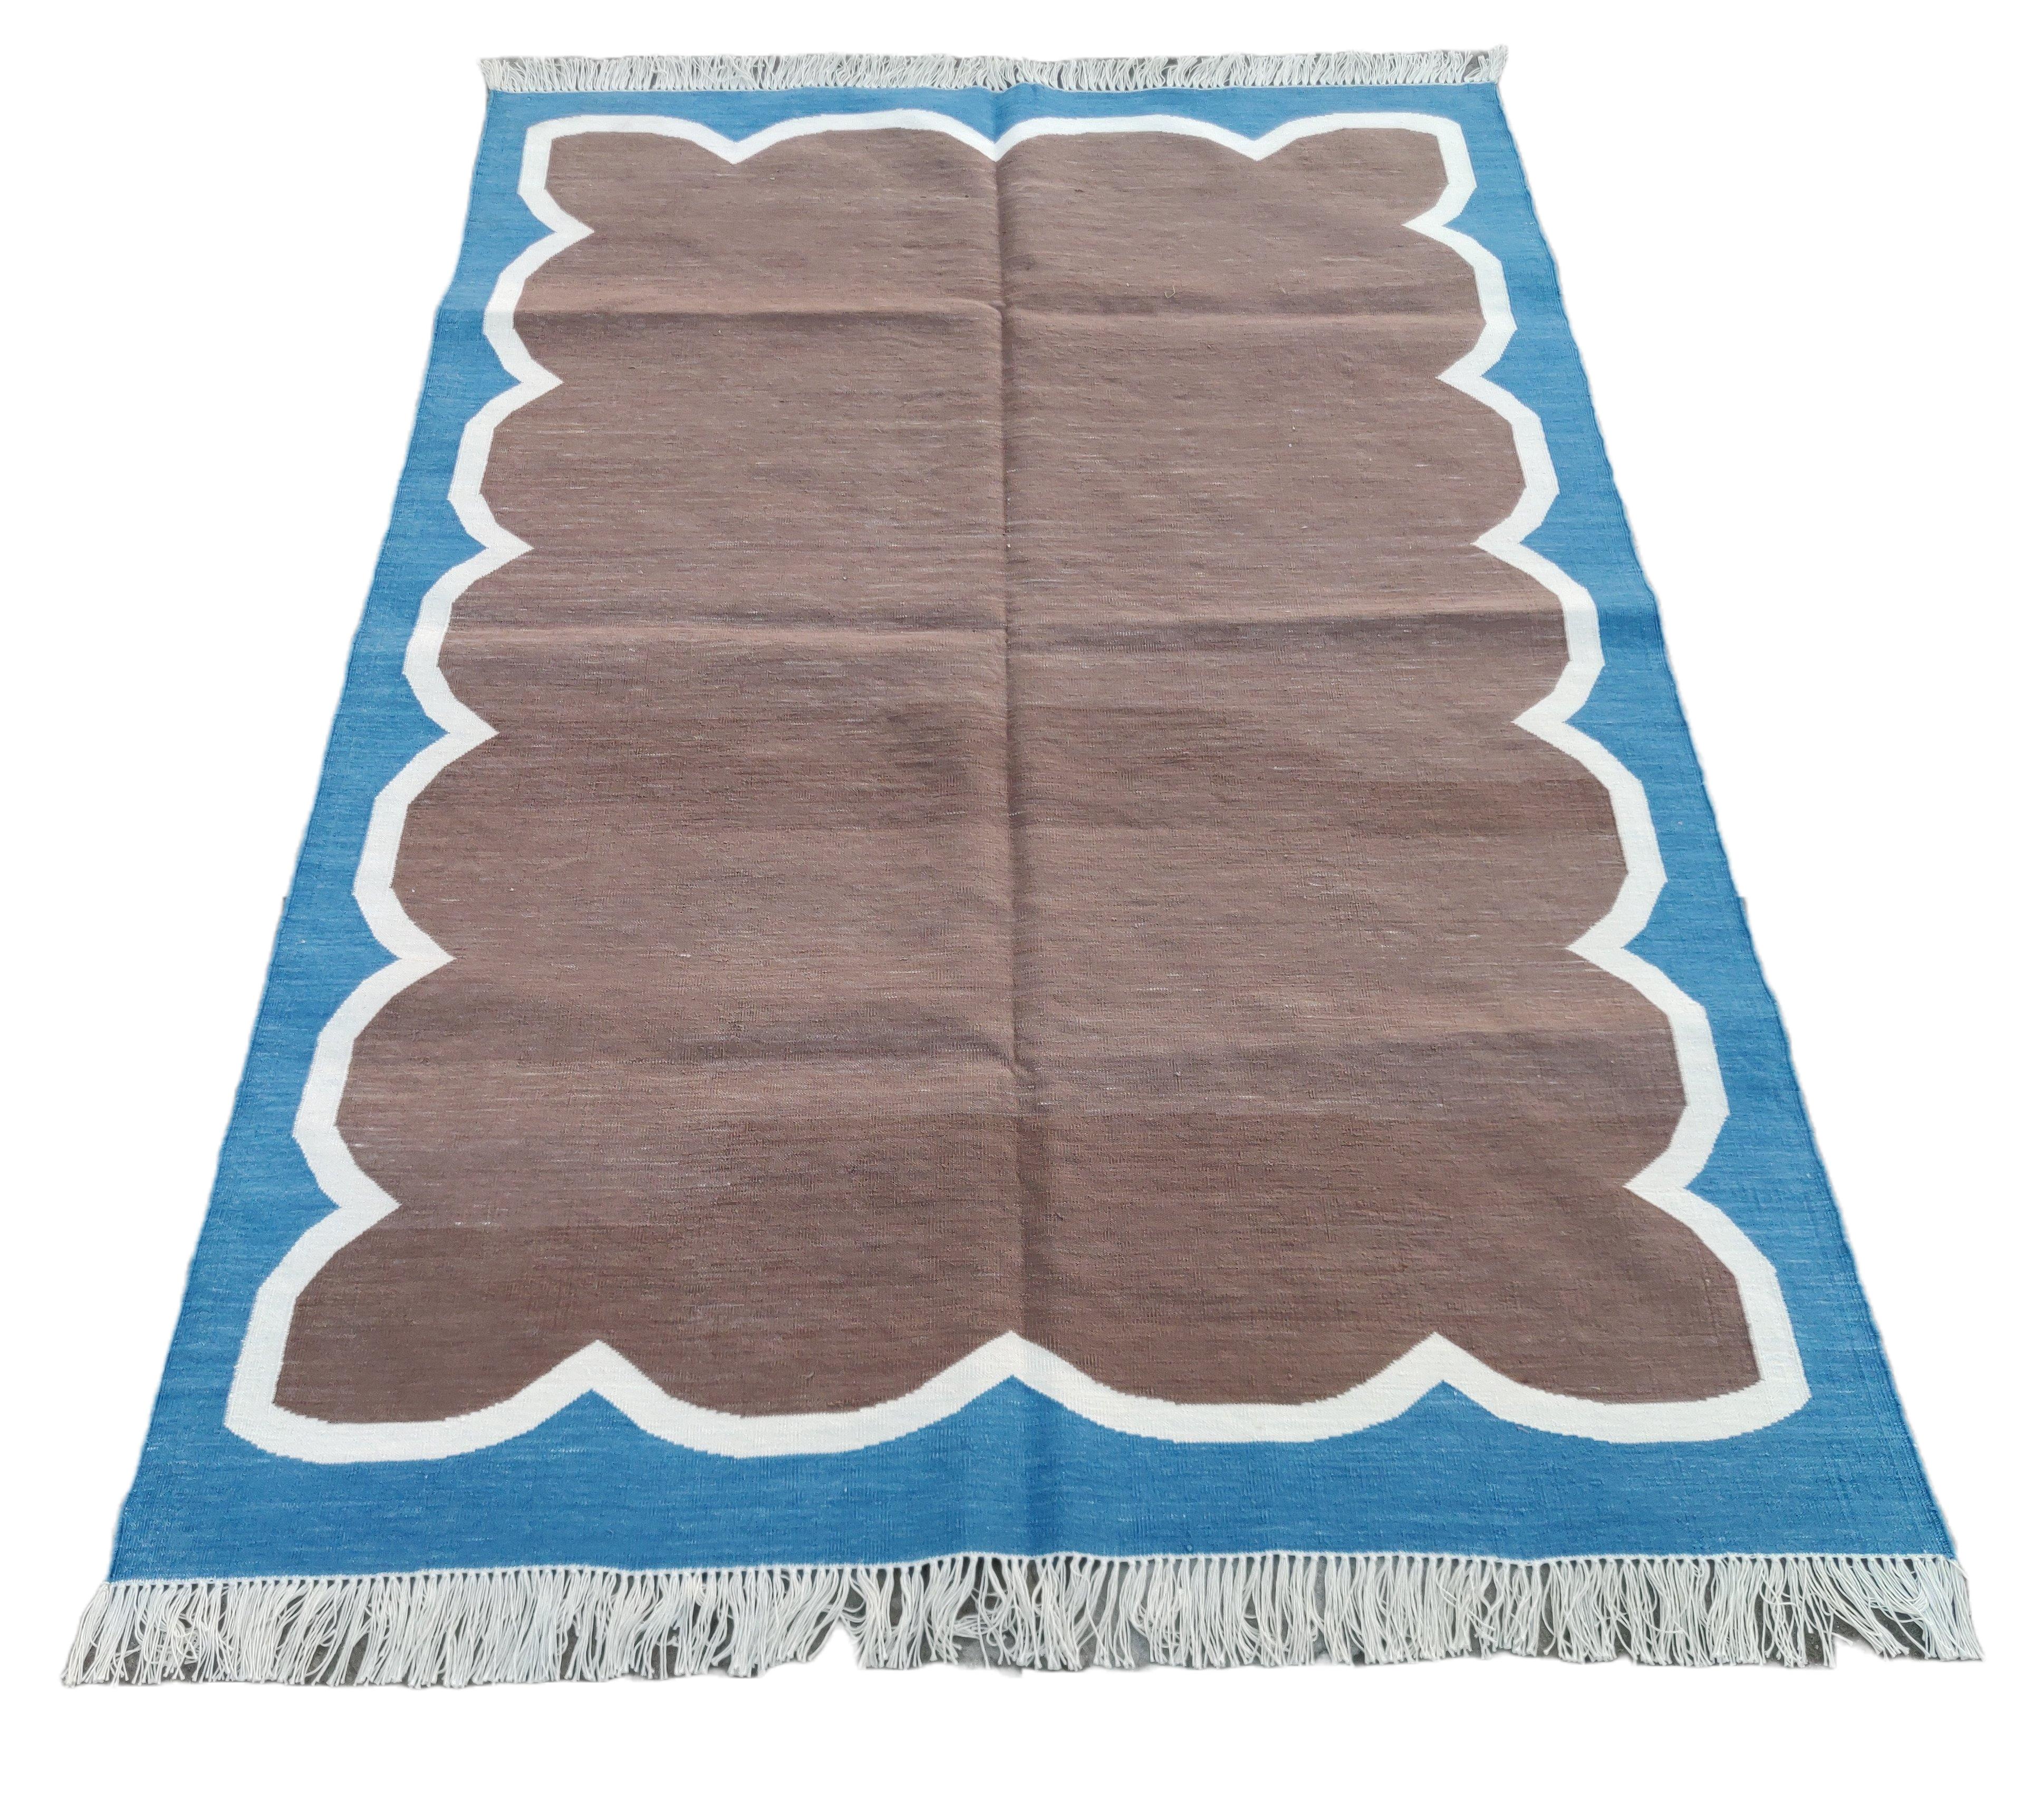 Handmade Cotton Area Flat Weave Rug, 4x6 Brown And Blue Scalloped Indian Dhurrie (Handgewebt) im Angebot